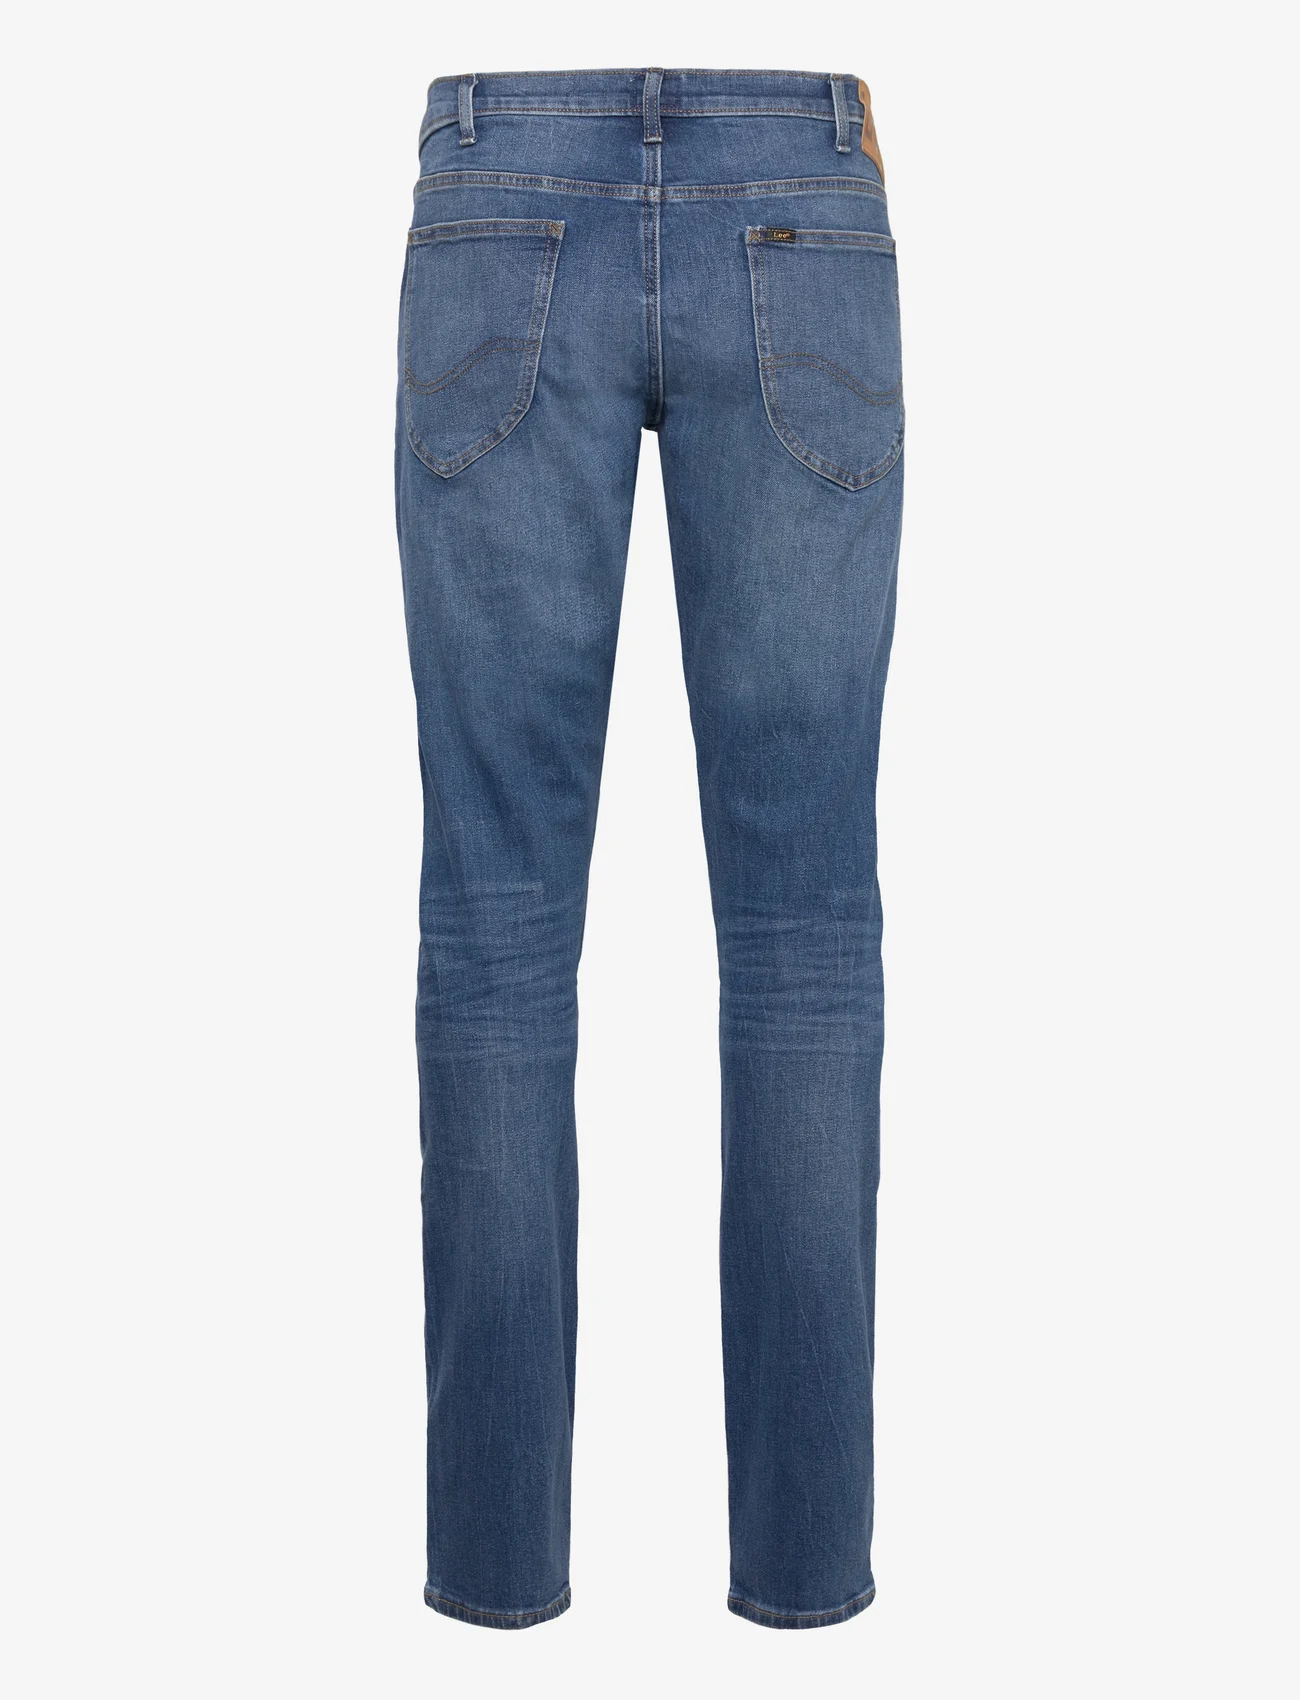 Lee Jeans - LUKE - slim jeans - fresh - 1